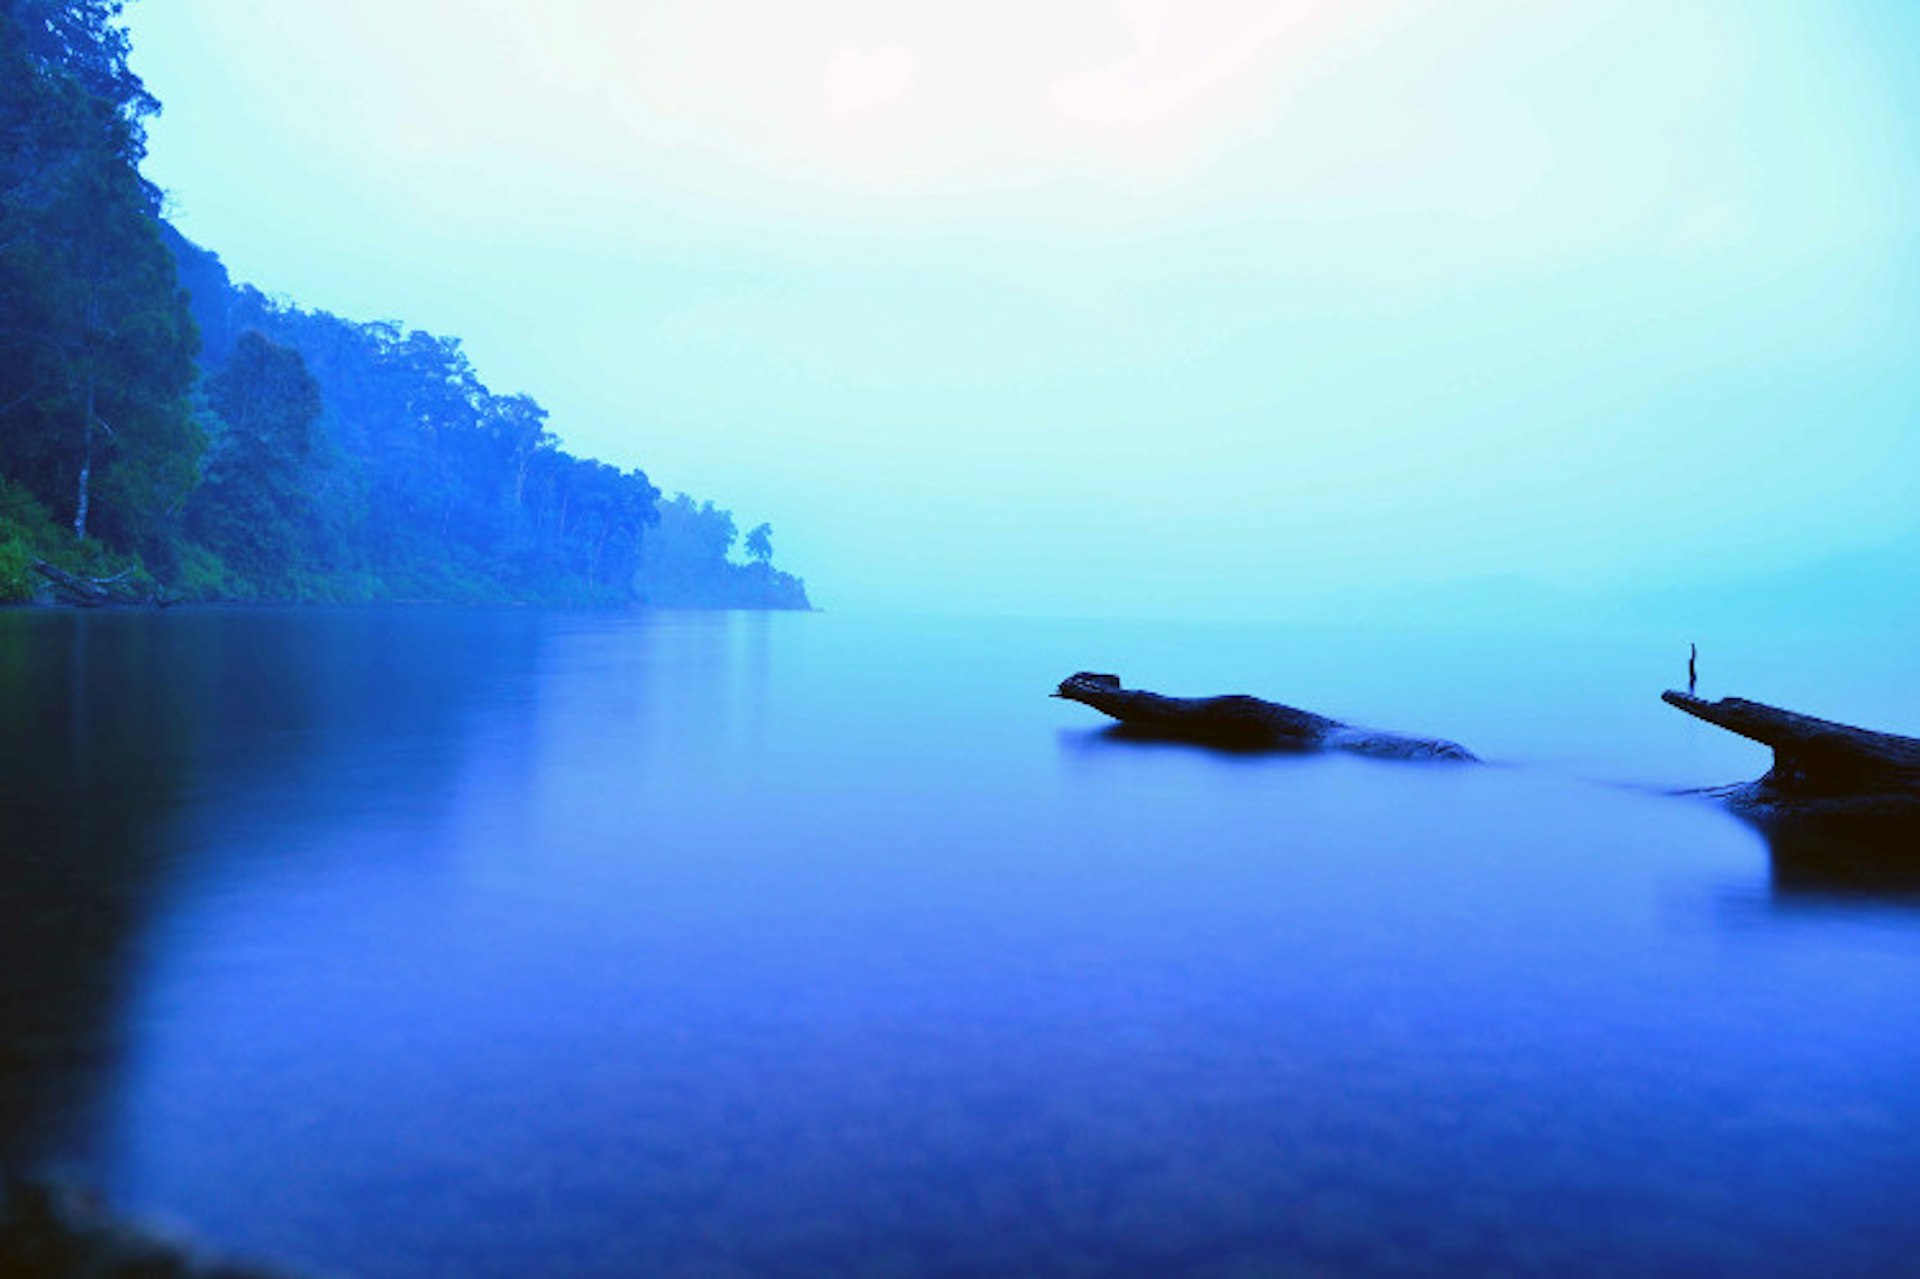 Danau Gunung Tujuh, Kerinci Seblat National Park, Sumatra. Image by Mark Eveleigh